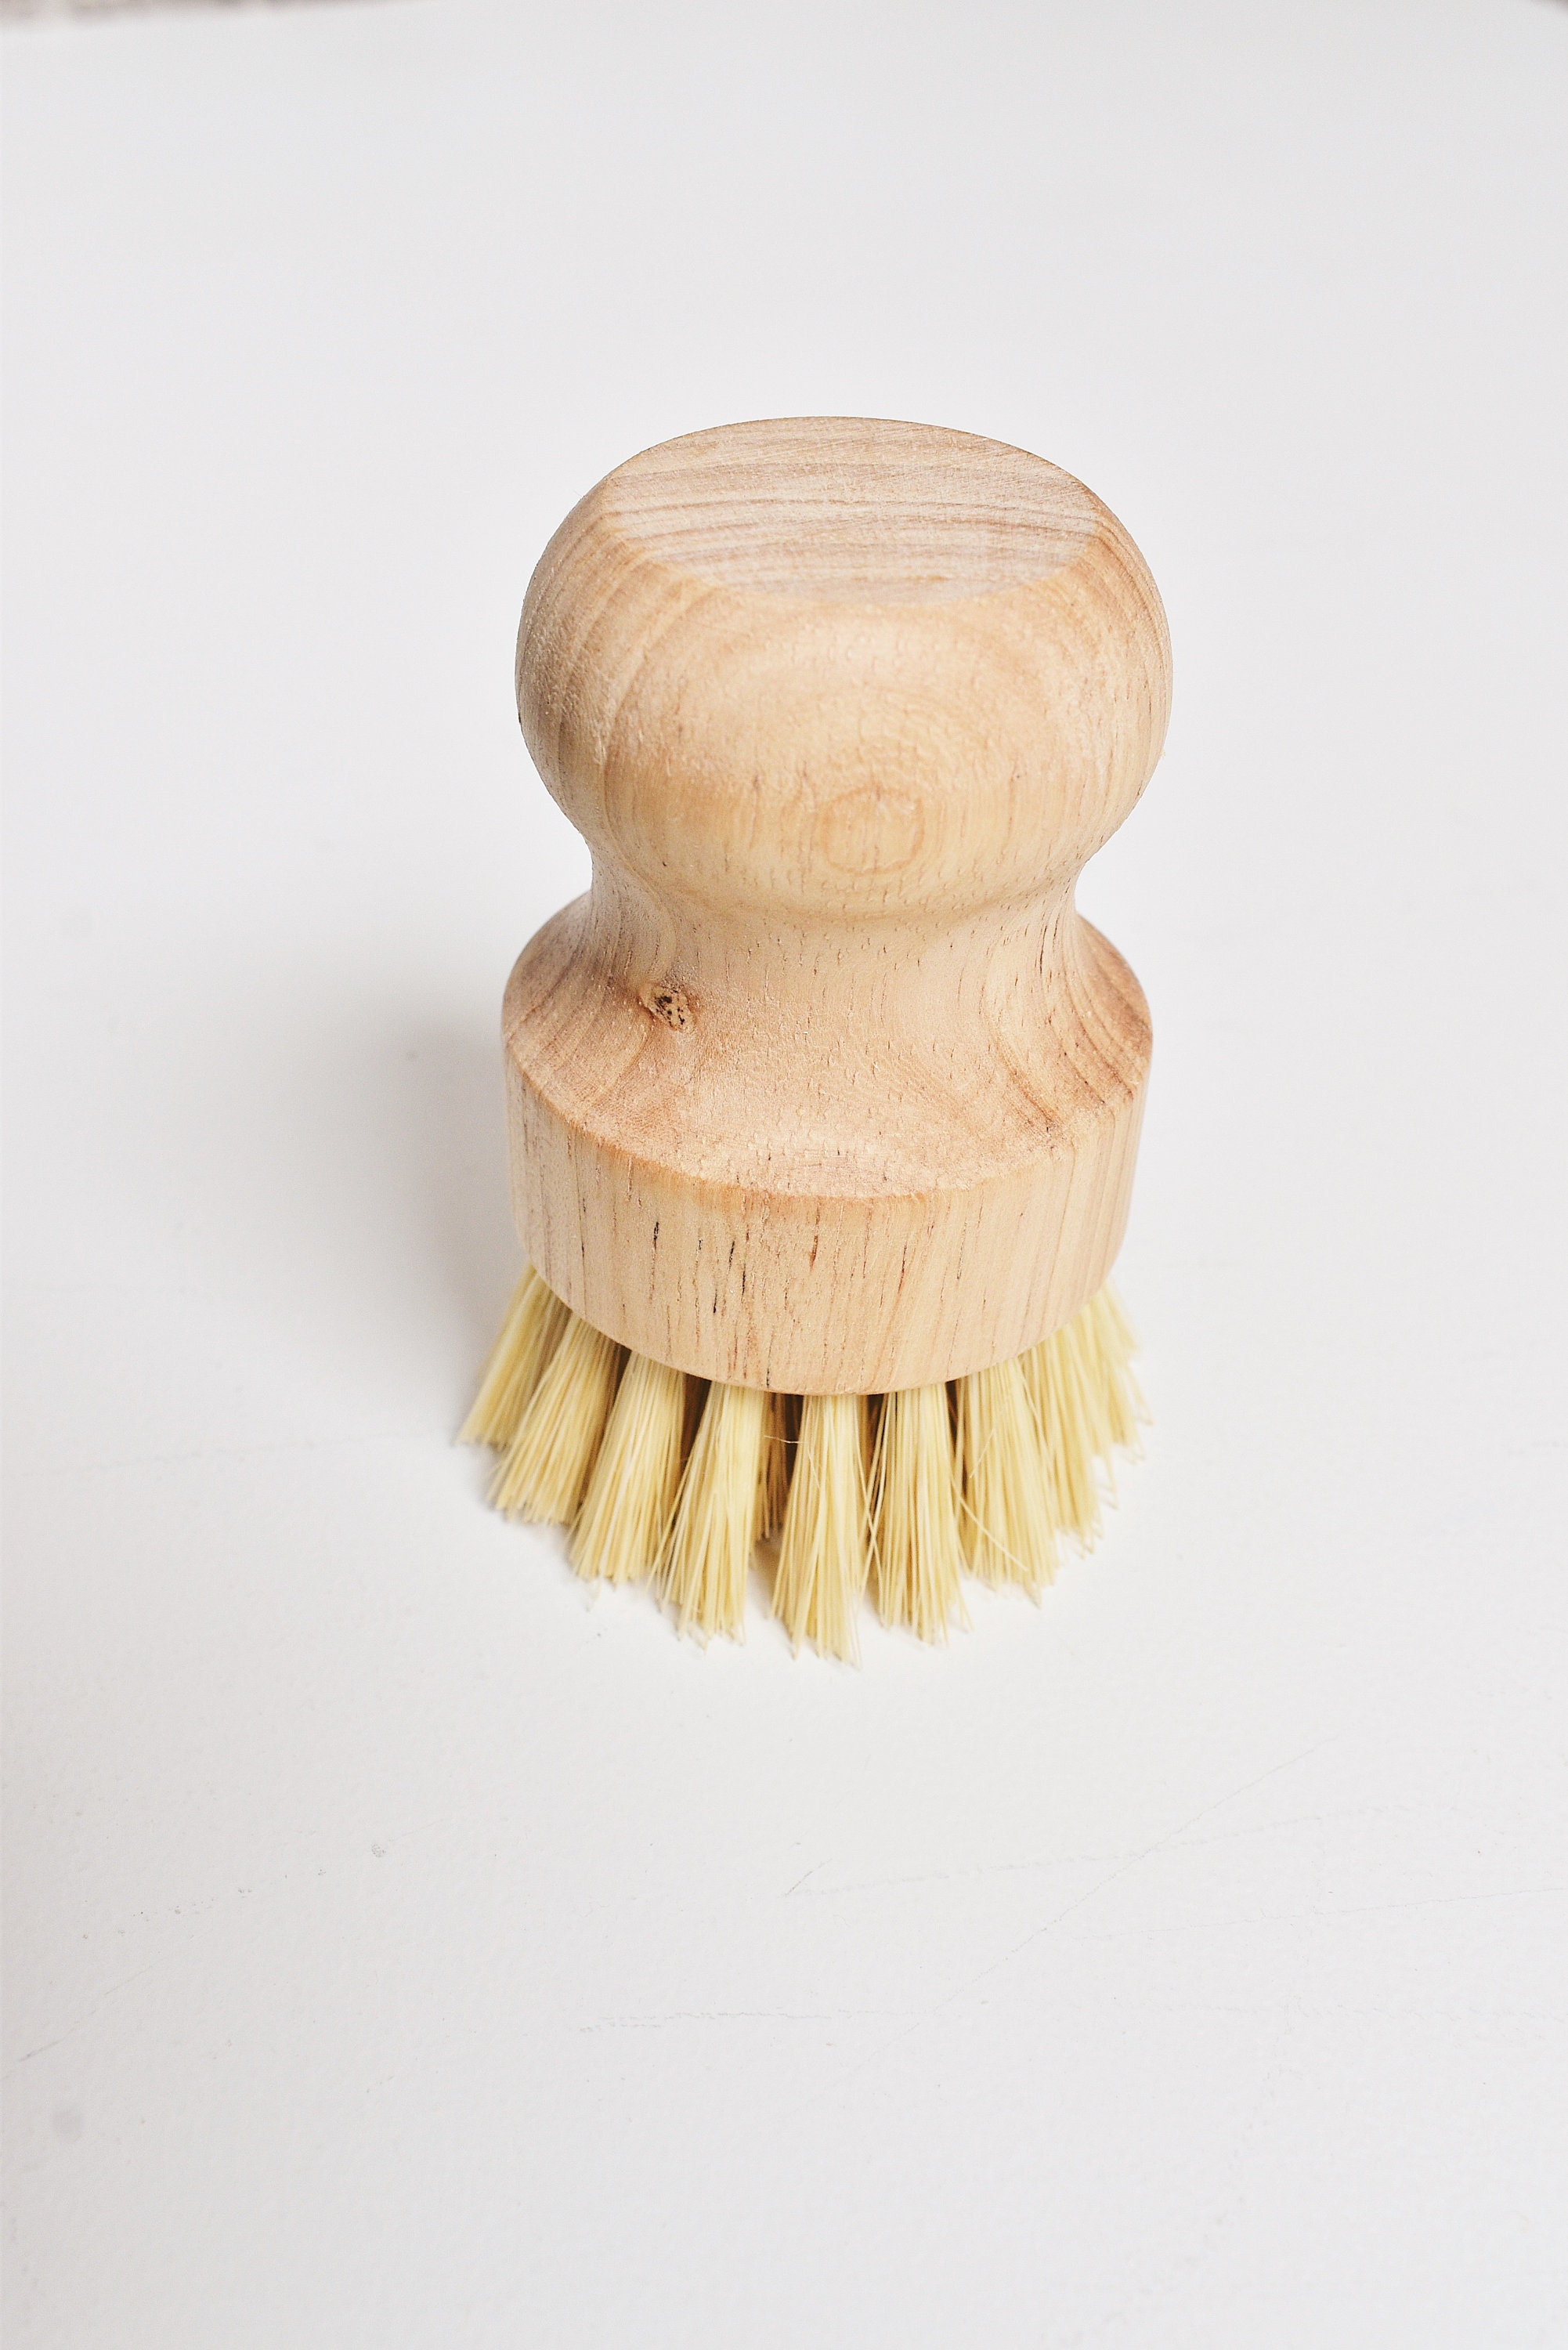 Wooden Pan Brush Oil-treated Maple Union Mixture Scrub Brush Pot